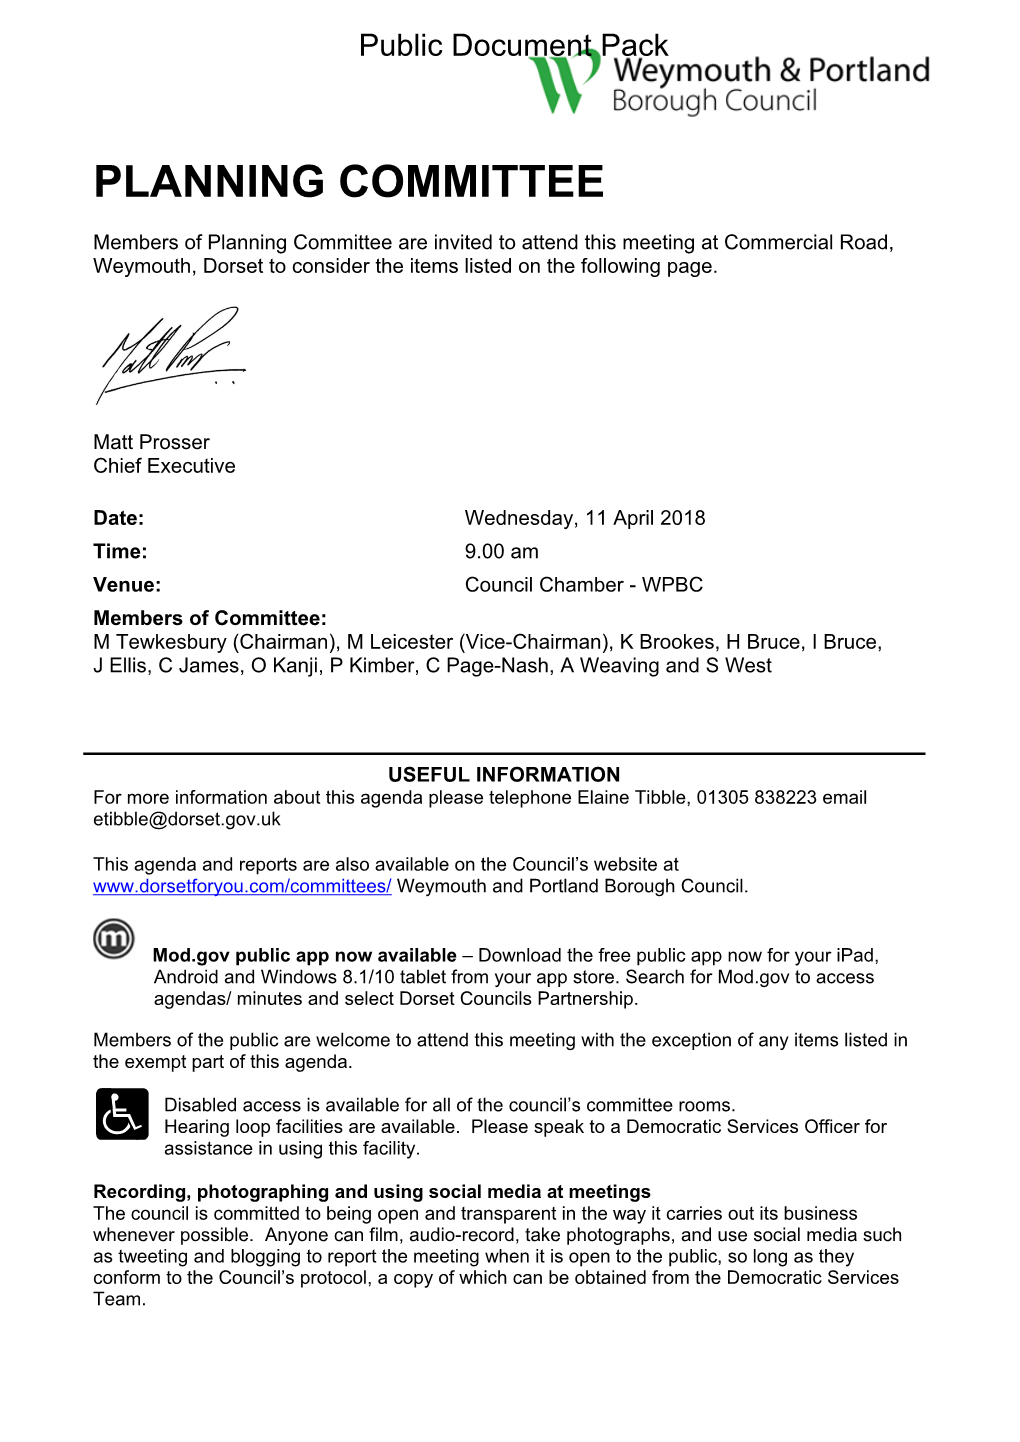 (Public Pack)Agenda Document for Weymouth & Portland Borough